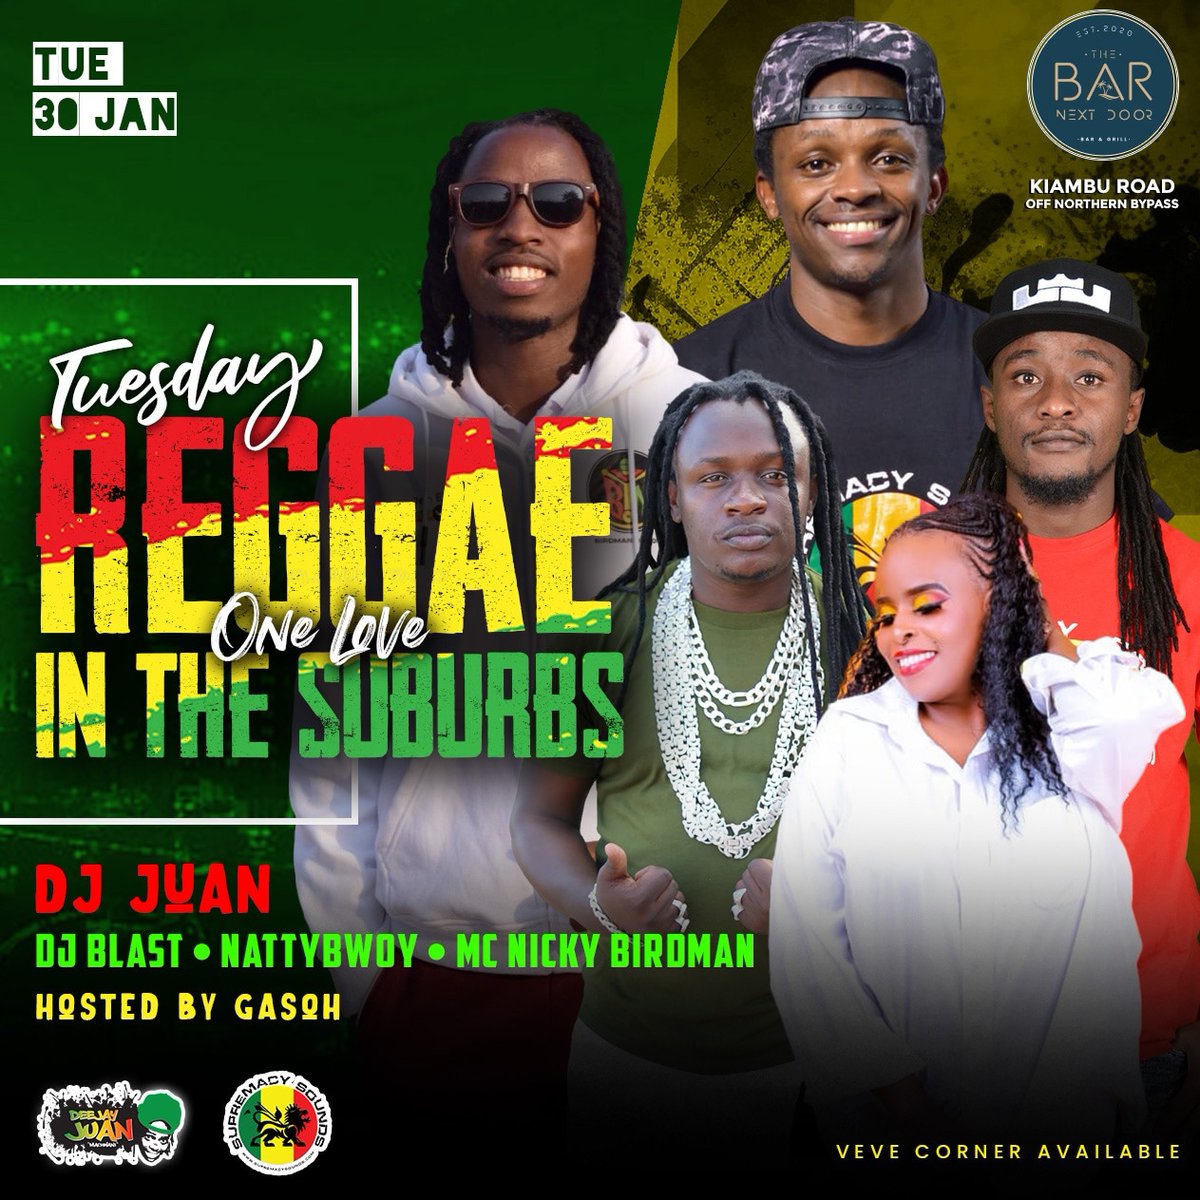 Last Tuesday of the month Njaaaanuary... Tuesday Reggae in the Suburbs happening TONIGHT at the Bar Next Door Kiambu Road.